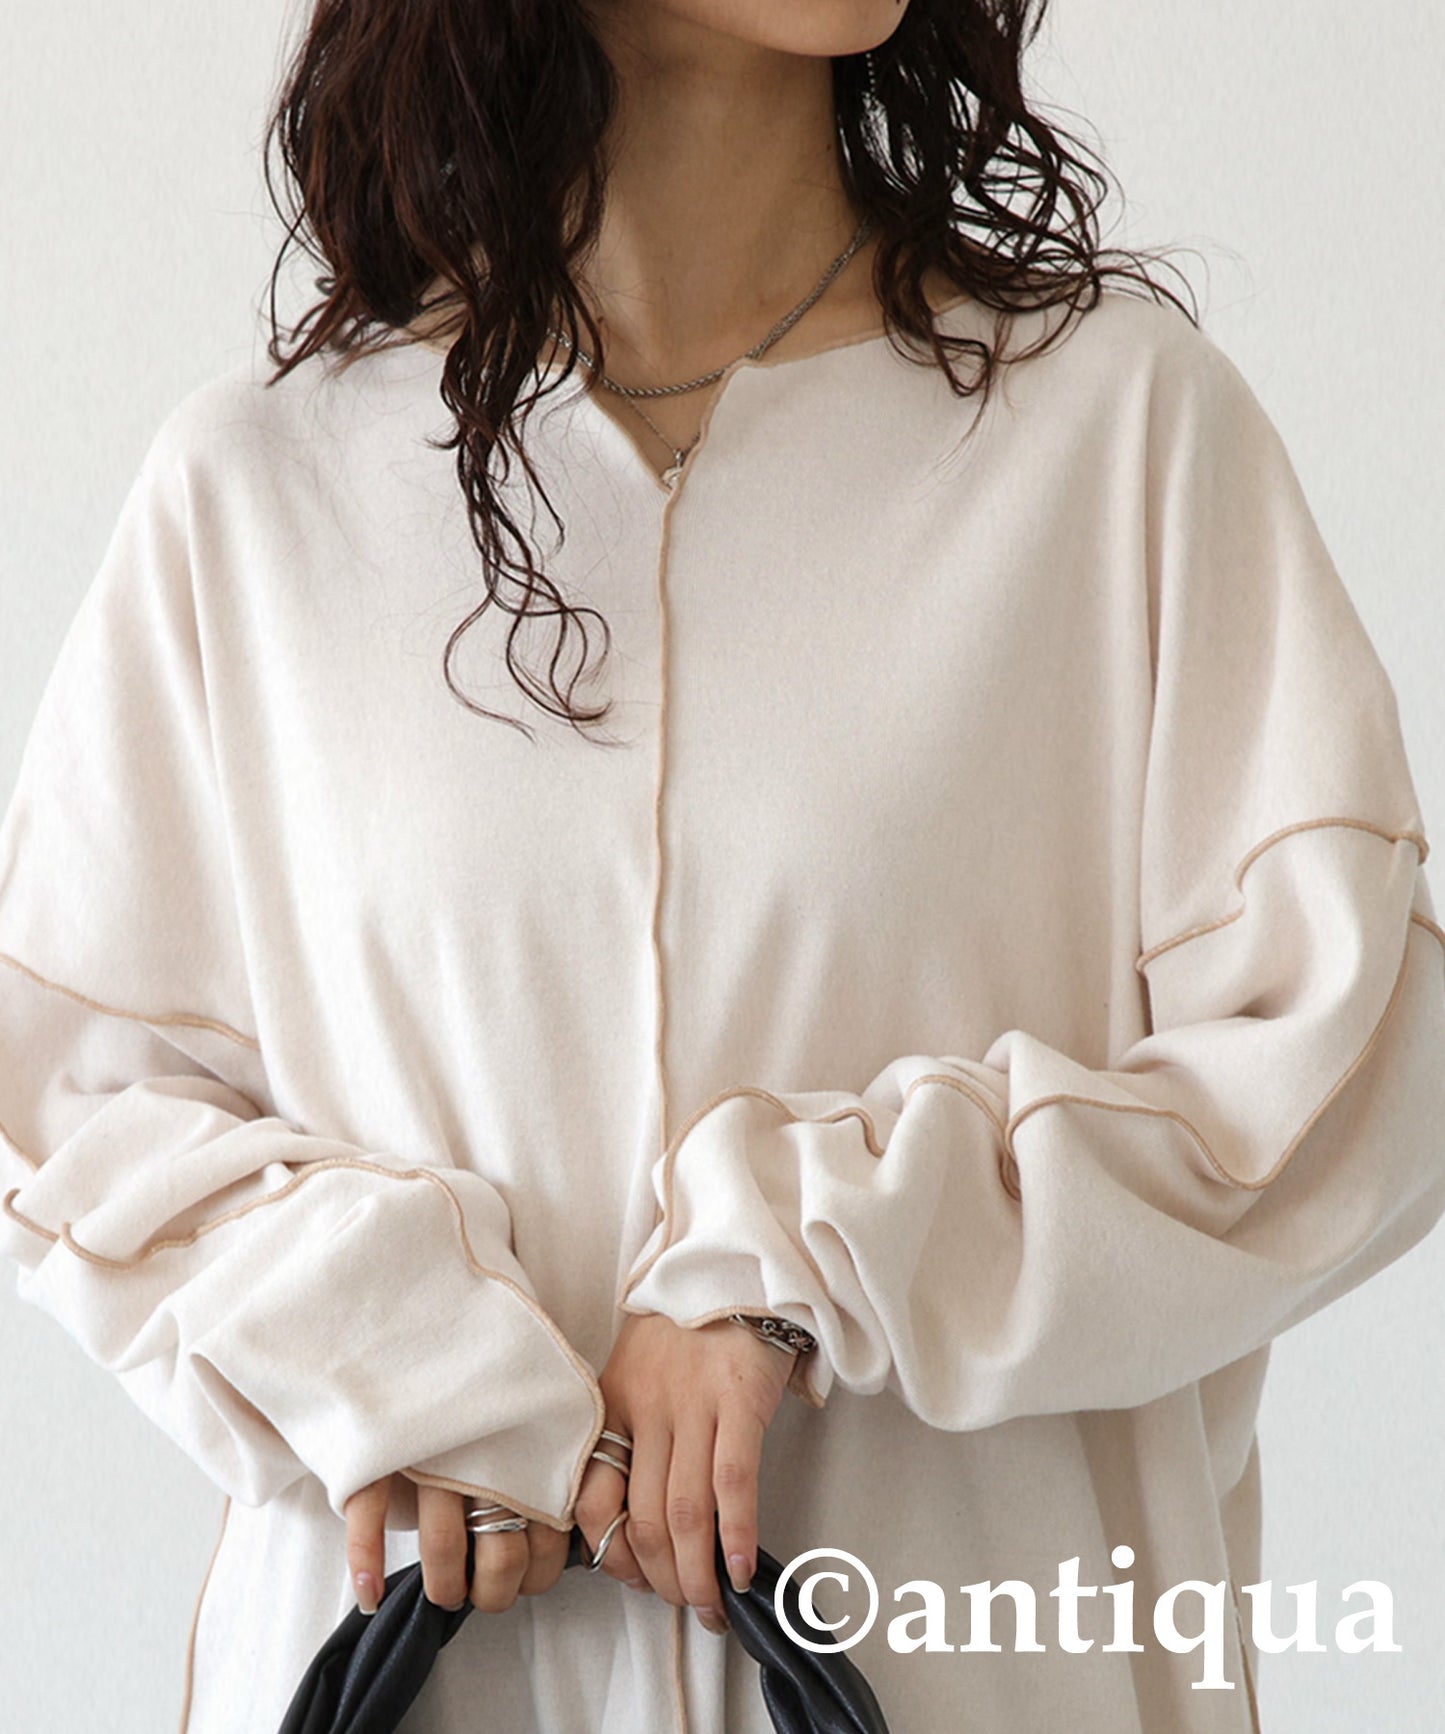 Circular rib fabric Tops Long-sleeved Ladies T-shirt Cotton 100%